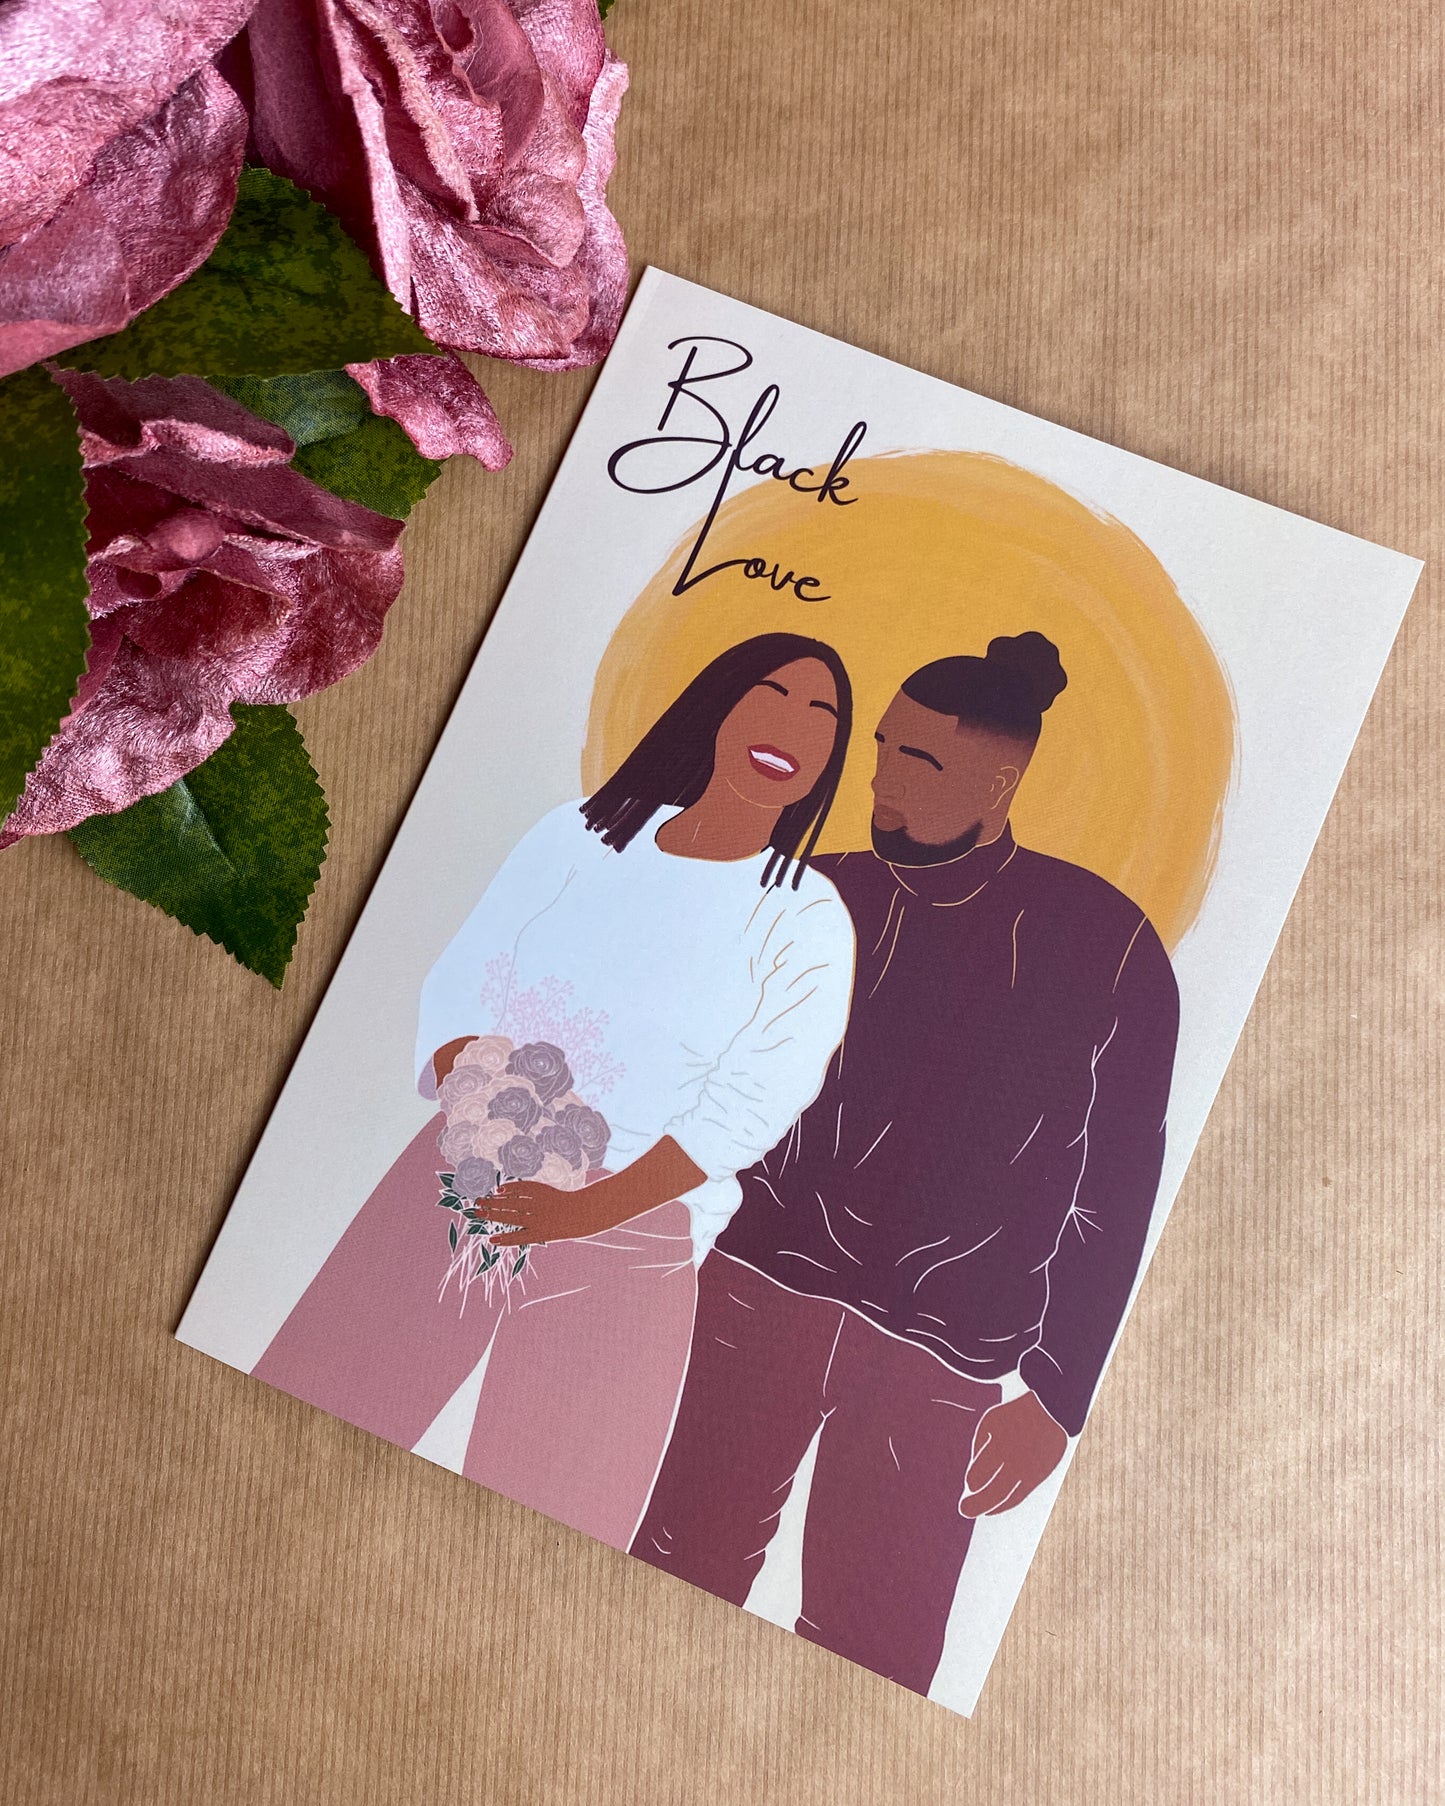 Black Lovers / Mixed Race Couple Greetings Card Locs braids